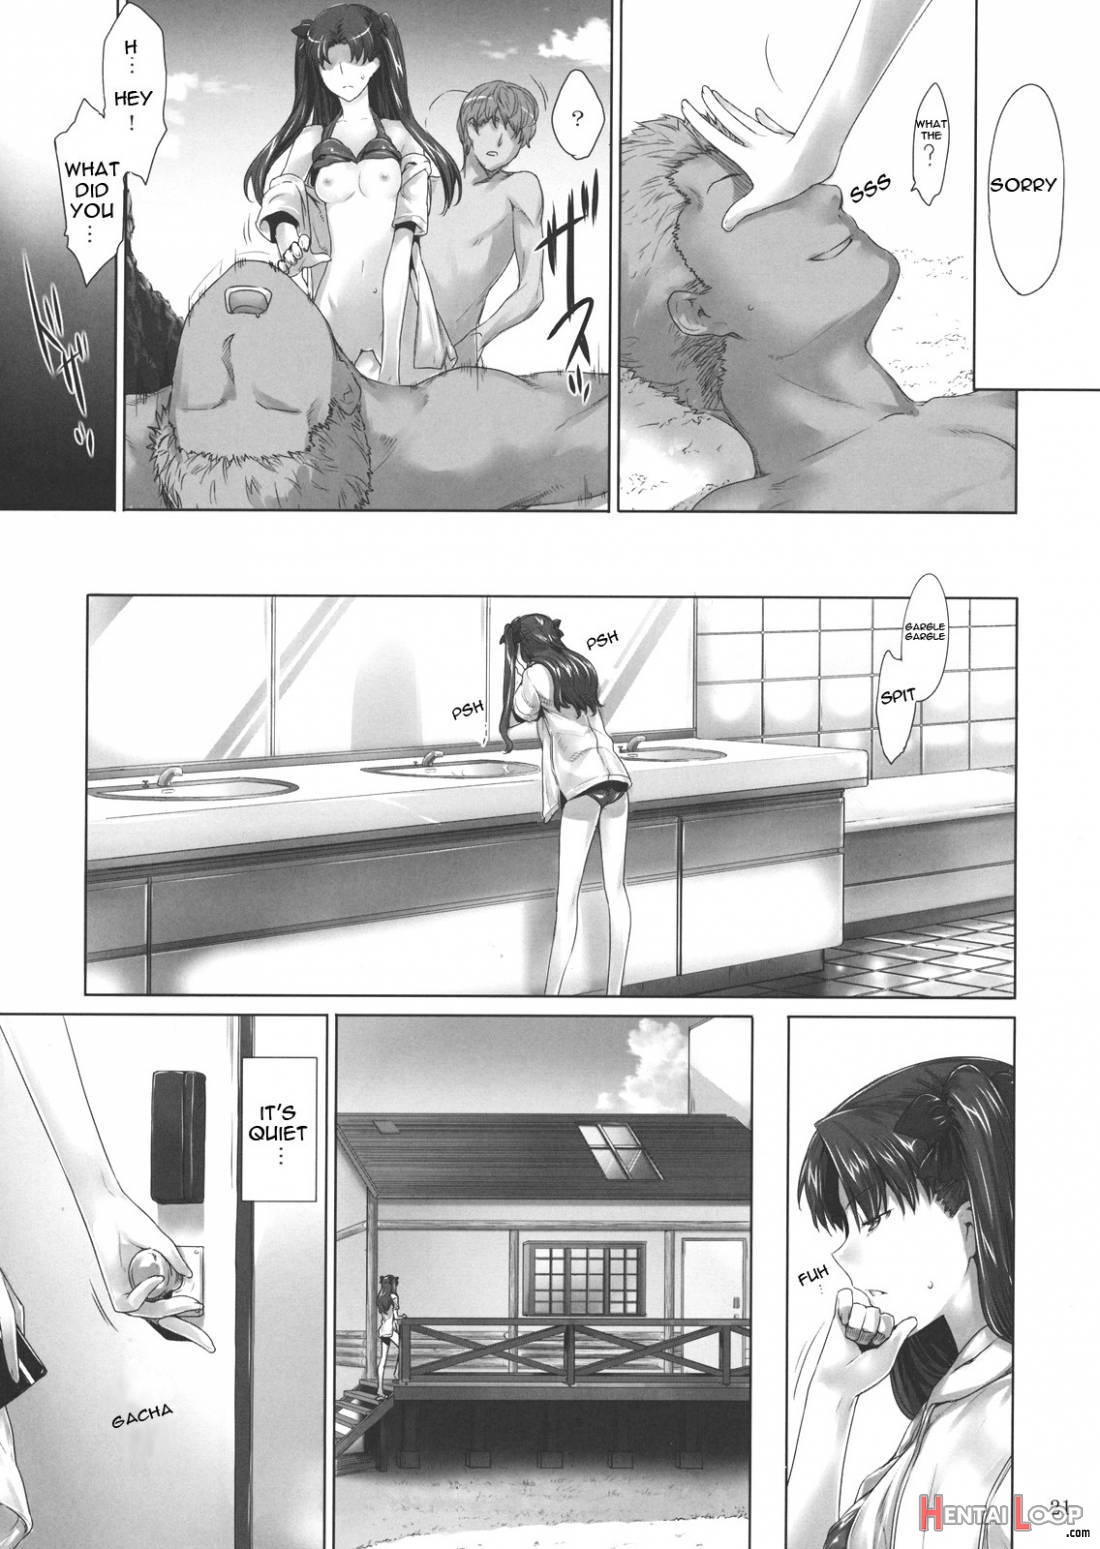 Tohsaka-ke no Kakei Jijou 7 page 20